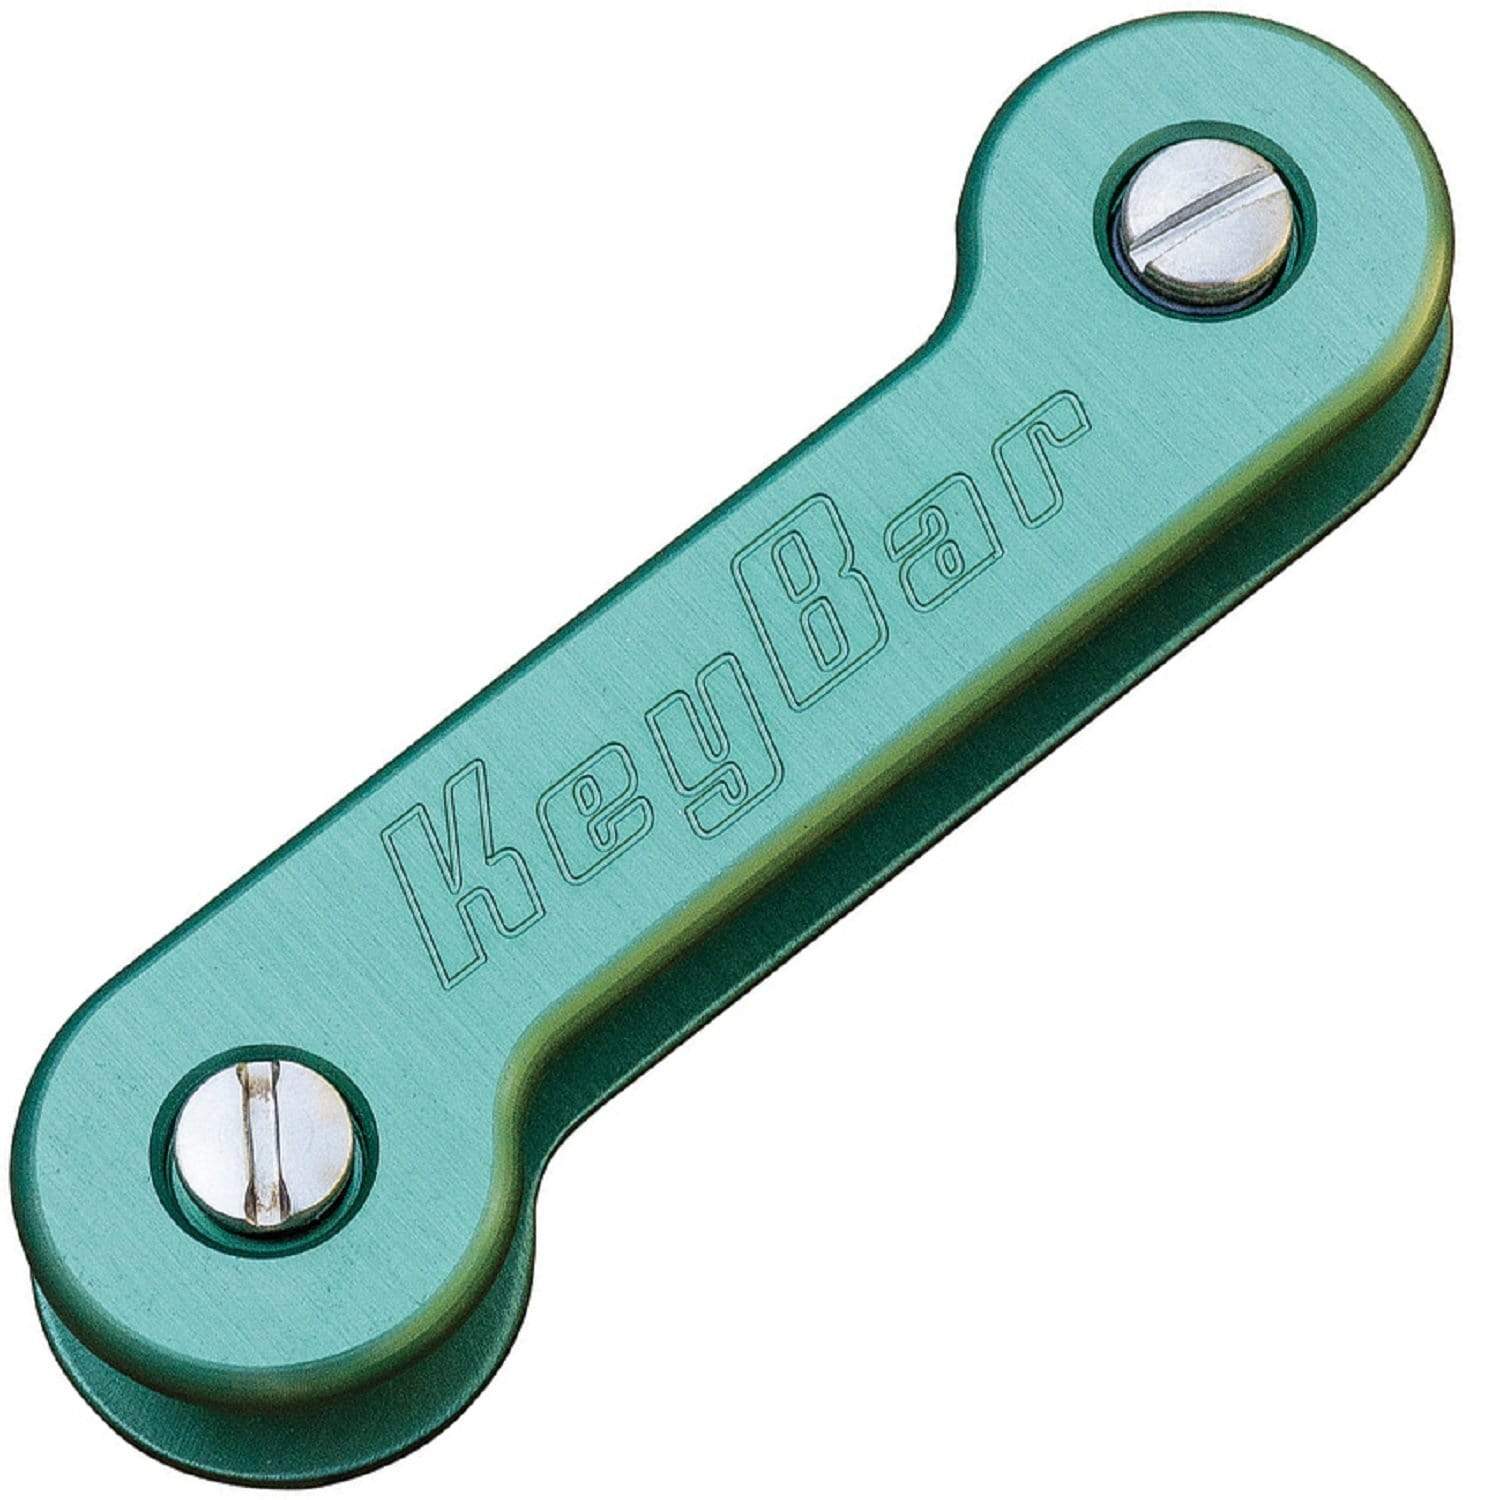 KeyBar Gifts & Novelty : Gifts KeyBar Green Anodized Aluminum